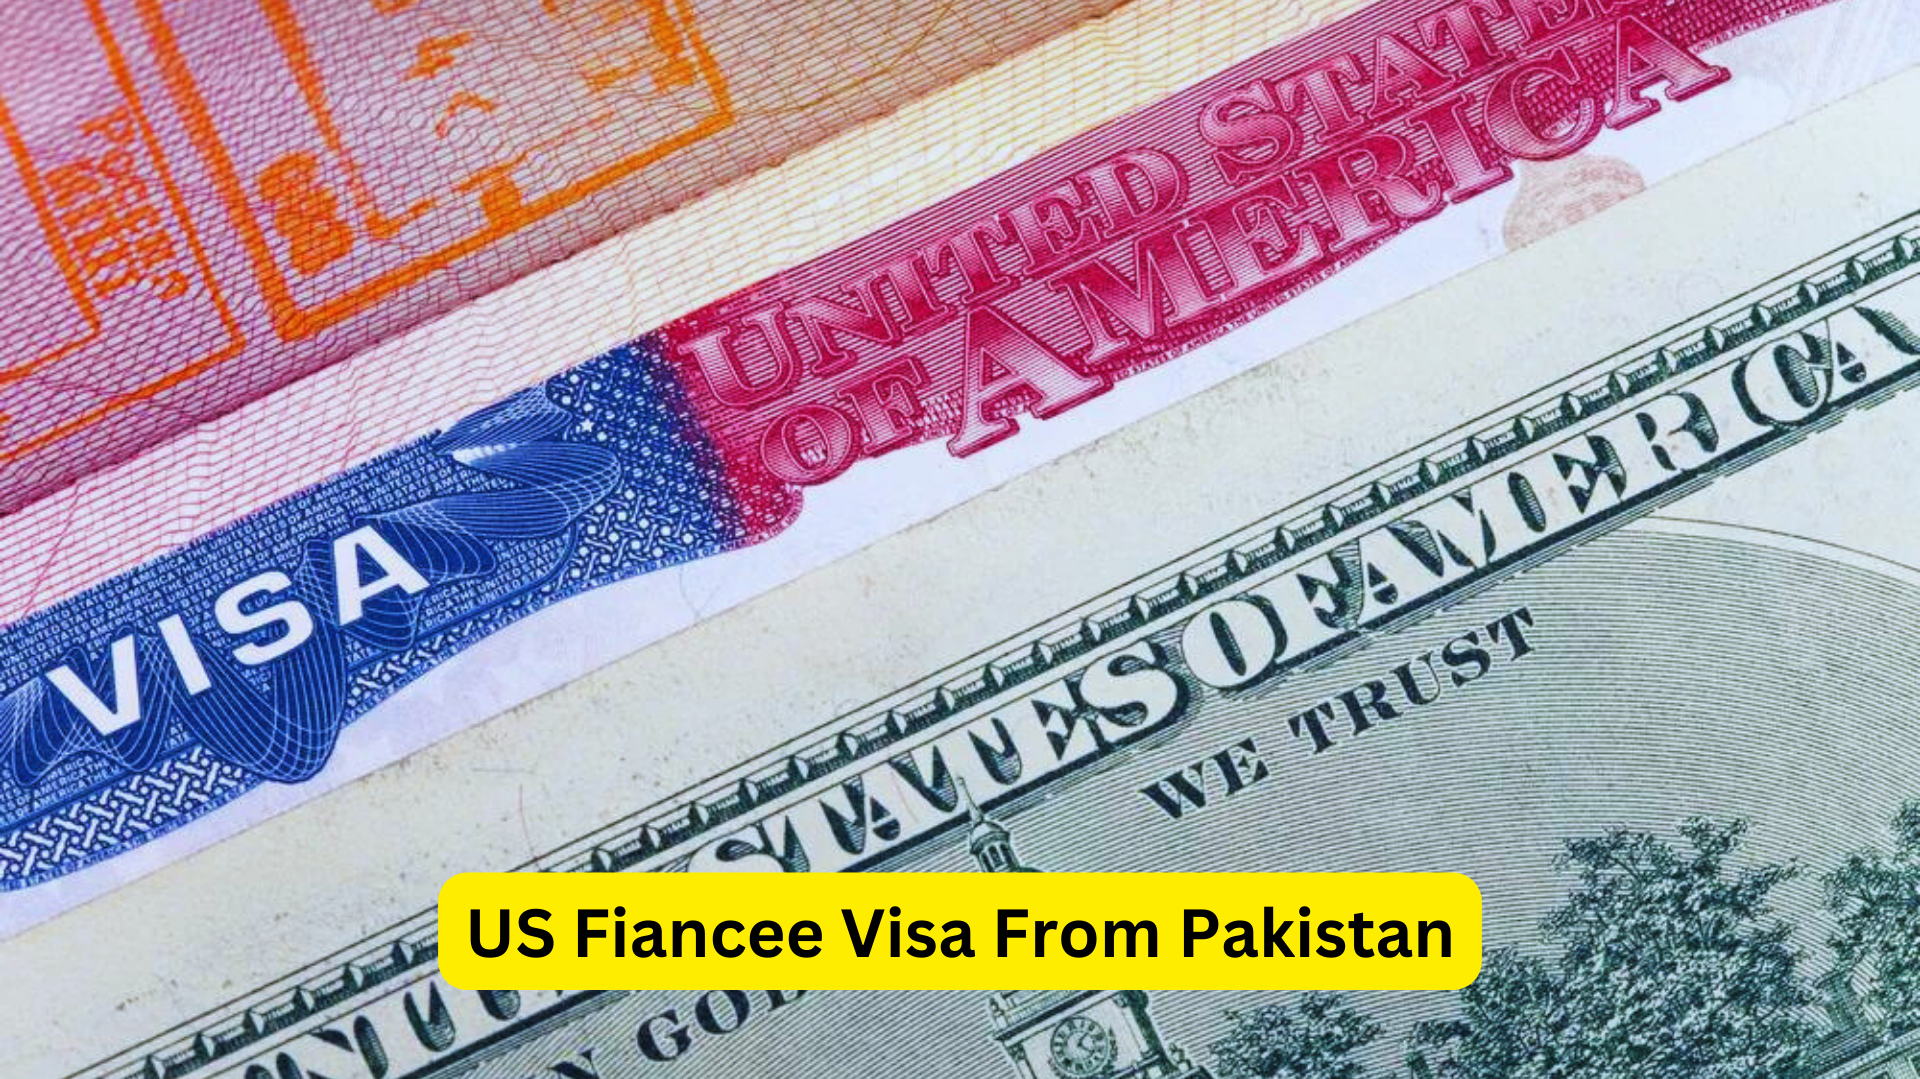 US Fiancee Visa From Pakistan